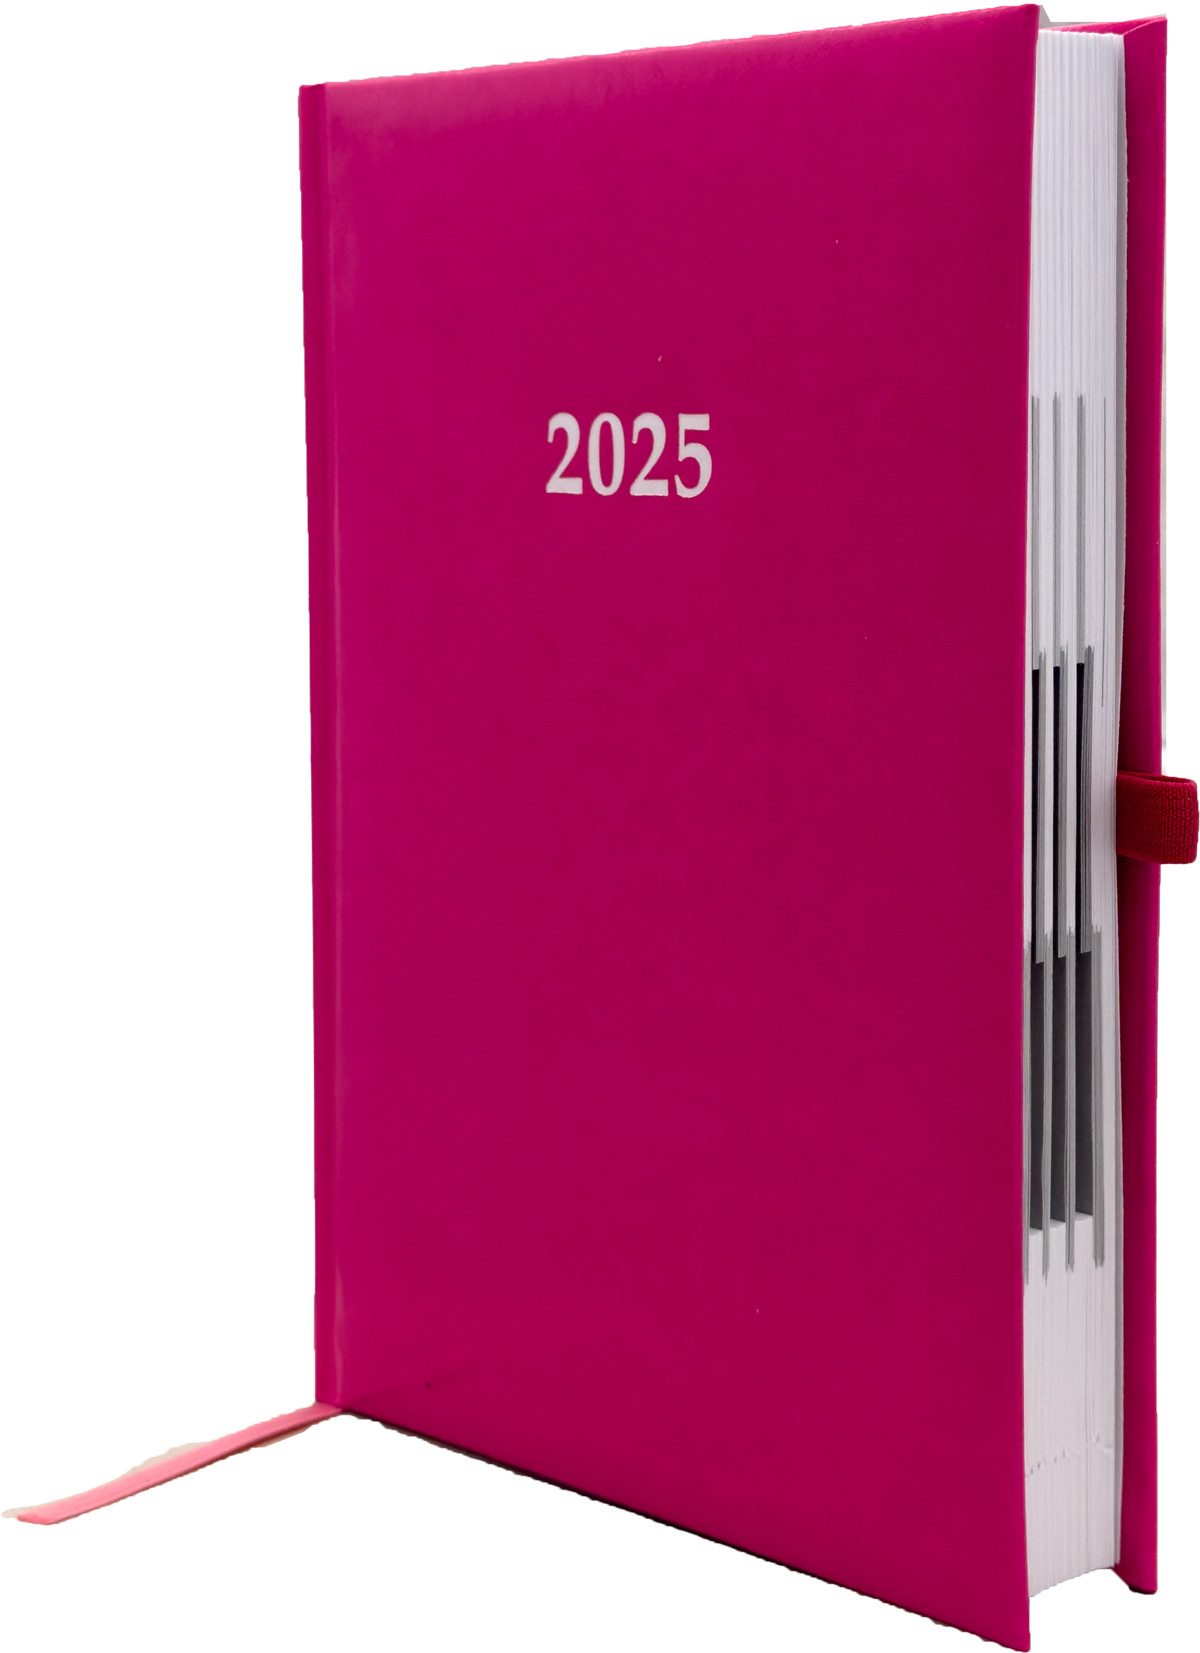 ADINA Buchkalender 2025 ADINA Buchkalender Chefplaner A5 pink 1 Tag 1 Seite auch sonntags